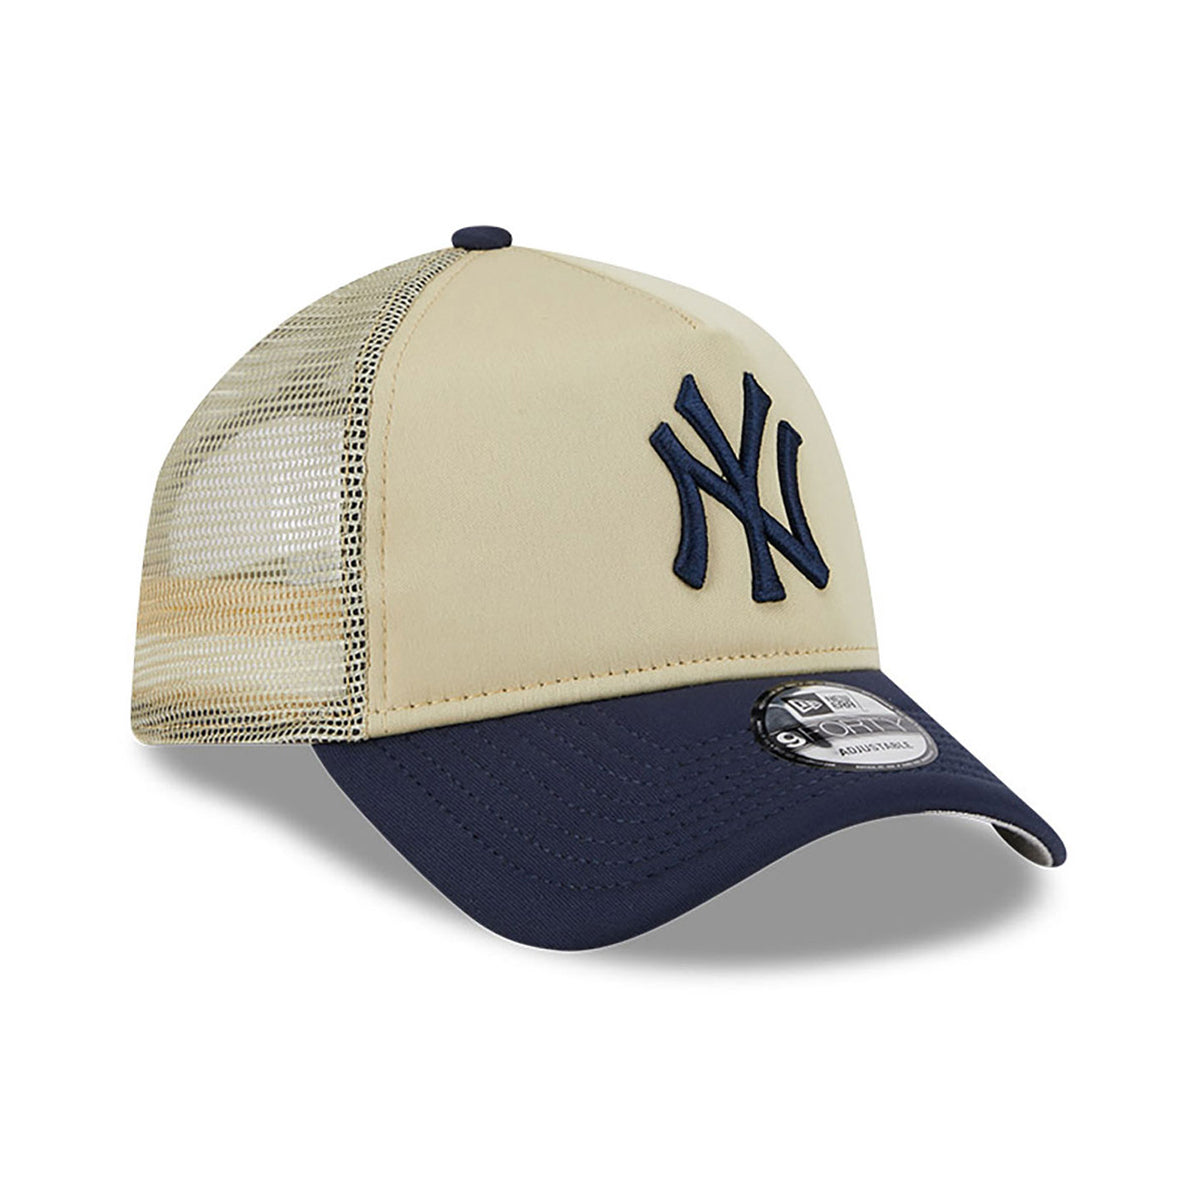 Black New Era MLB New York Yankees 9FORTY Side Patch Cap